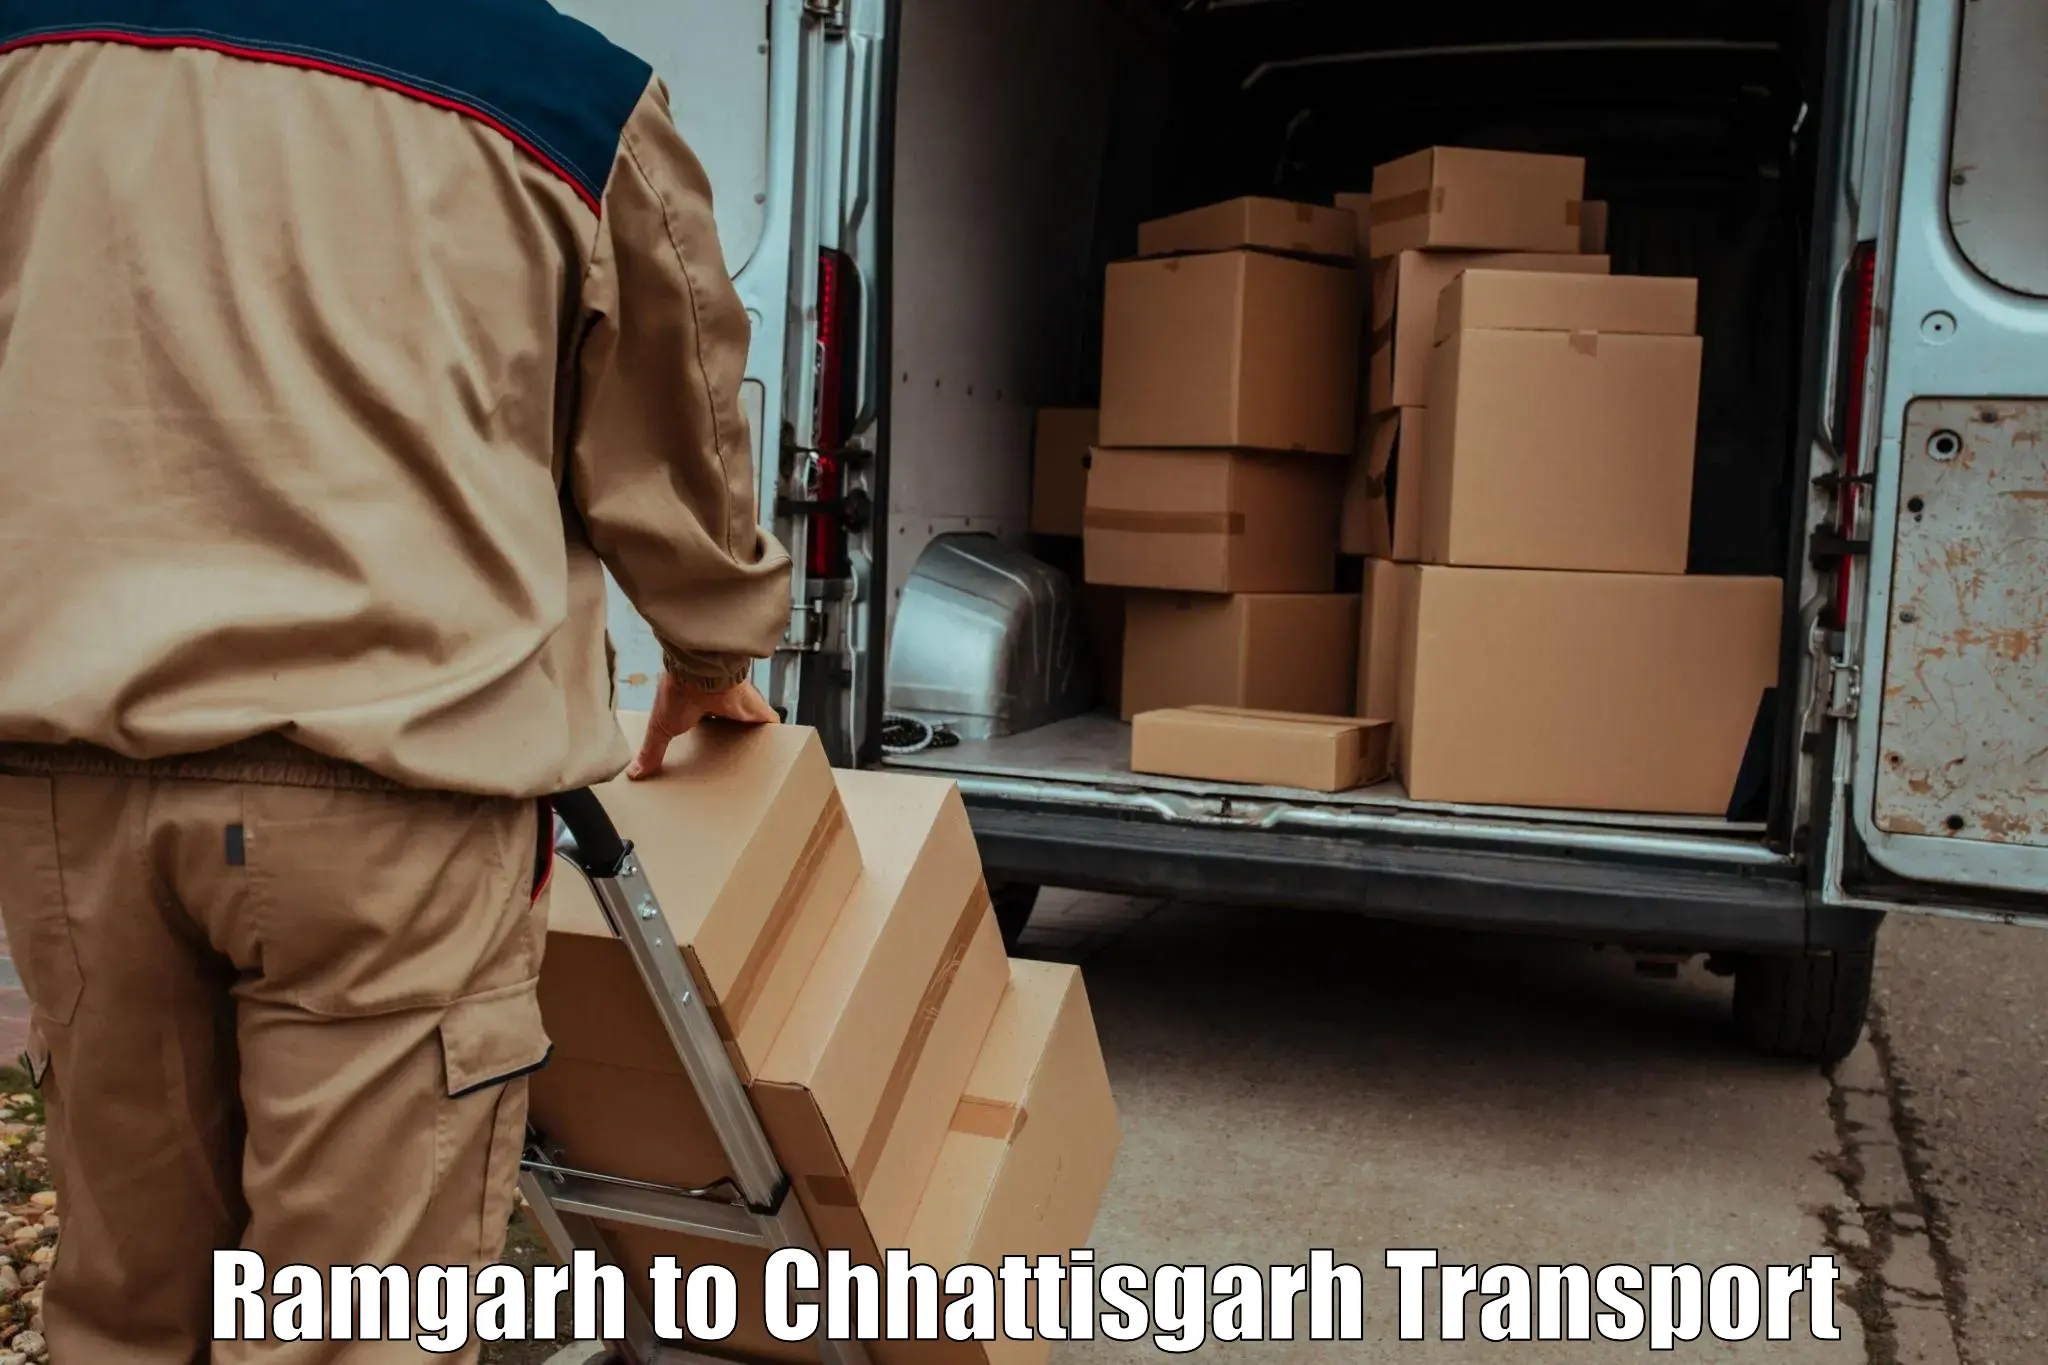 Shipping partner Ramgarh to Dongargarh